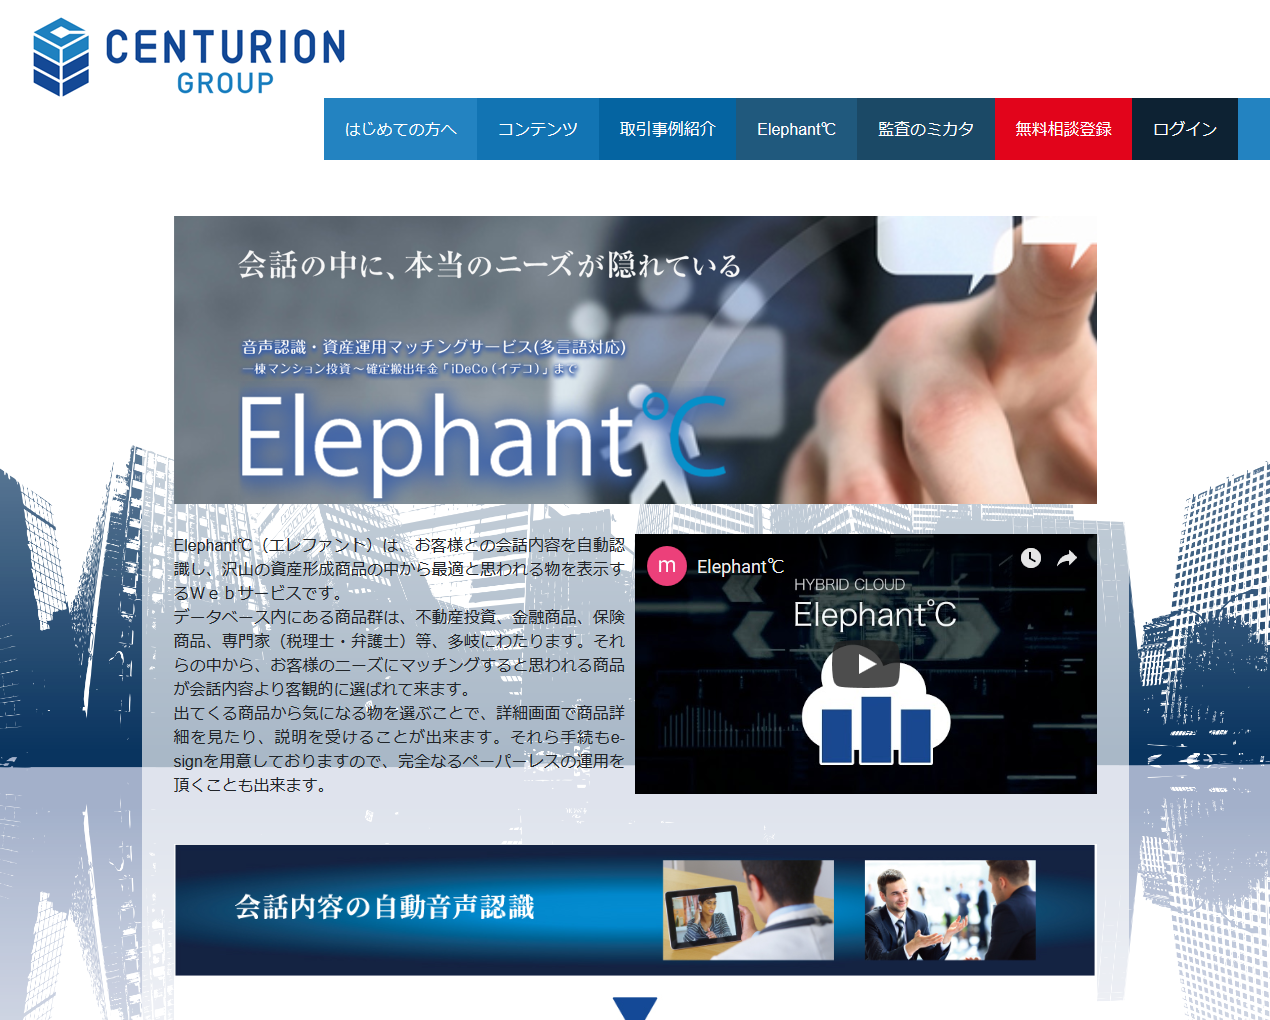 「Elephant℃」は、面談を通した会話内容の音声認識を行い、お客様に適した投資商品を提示するWebサービスです。